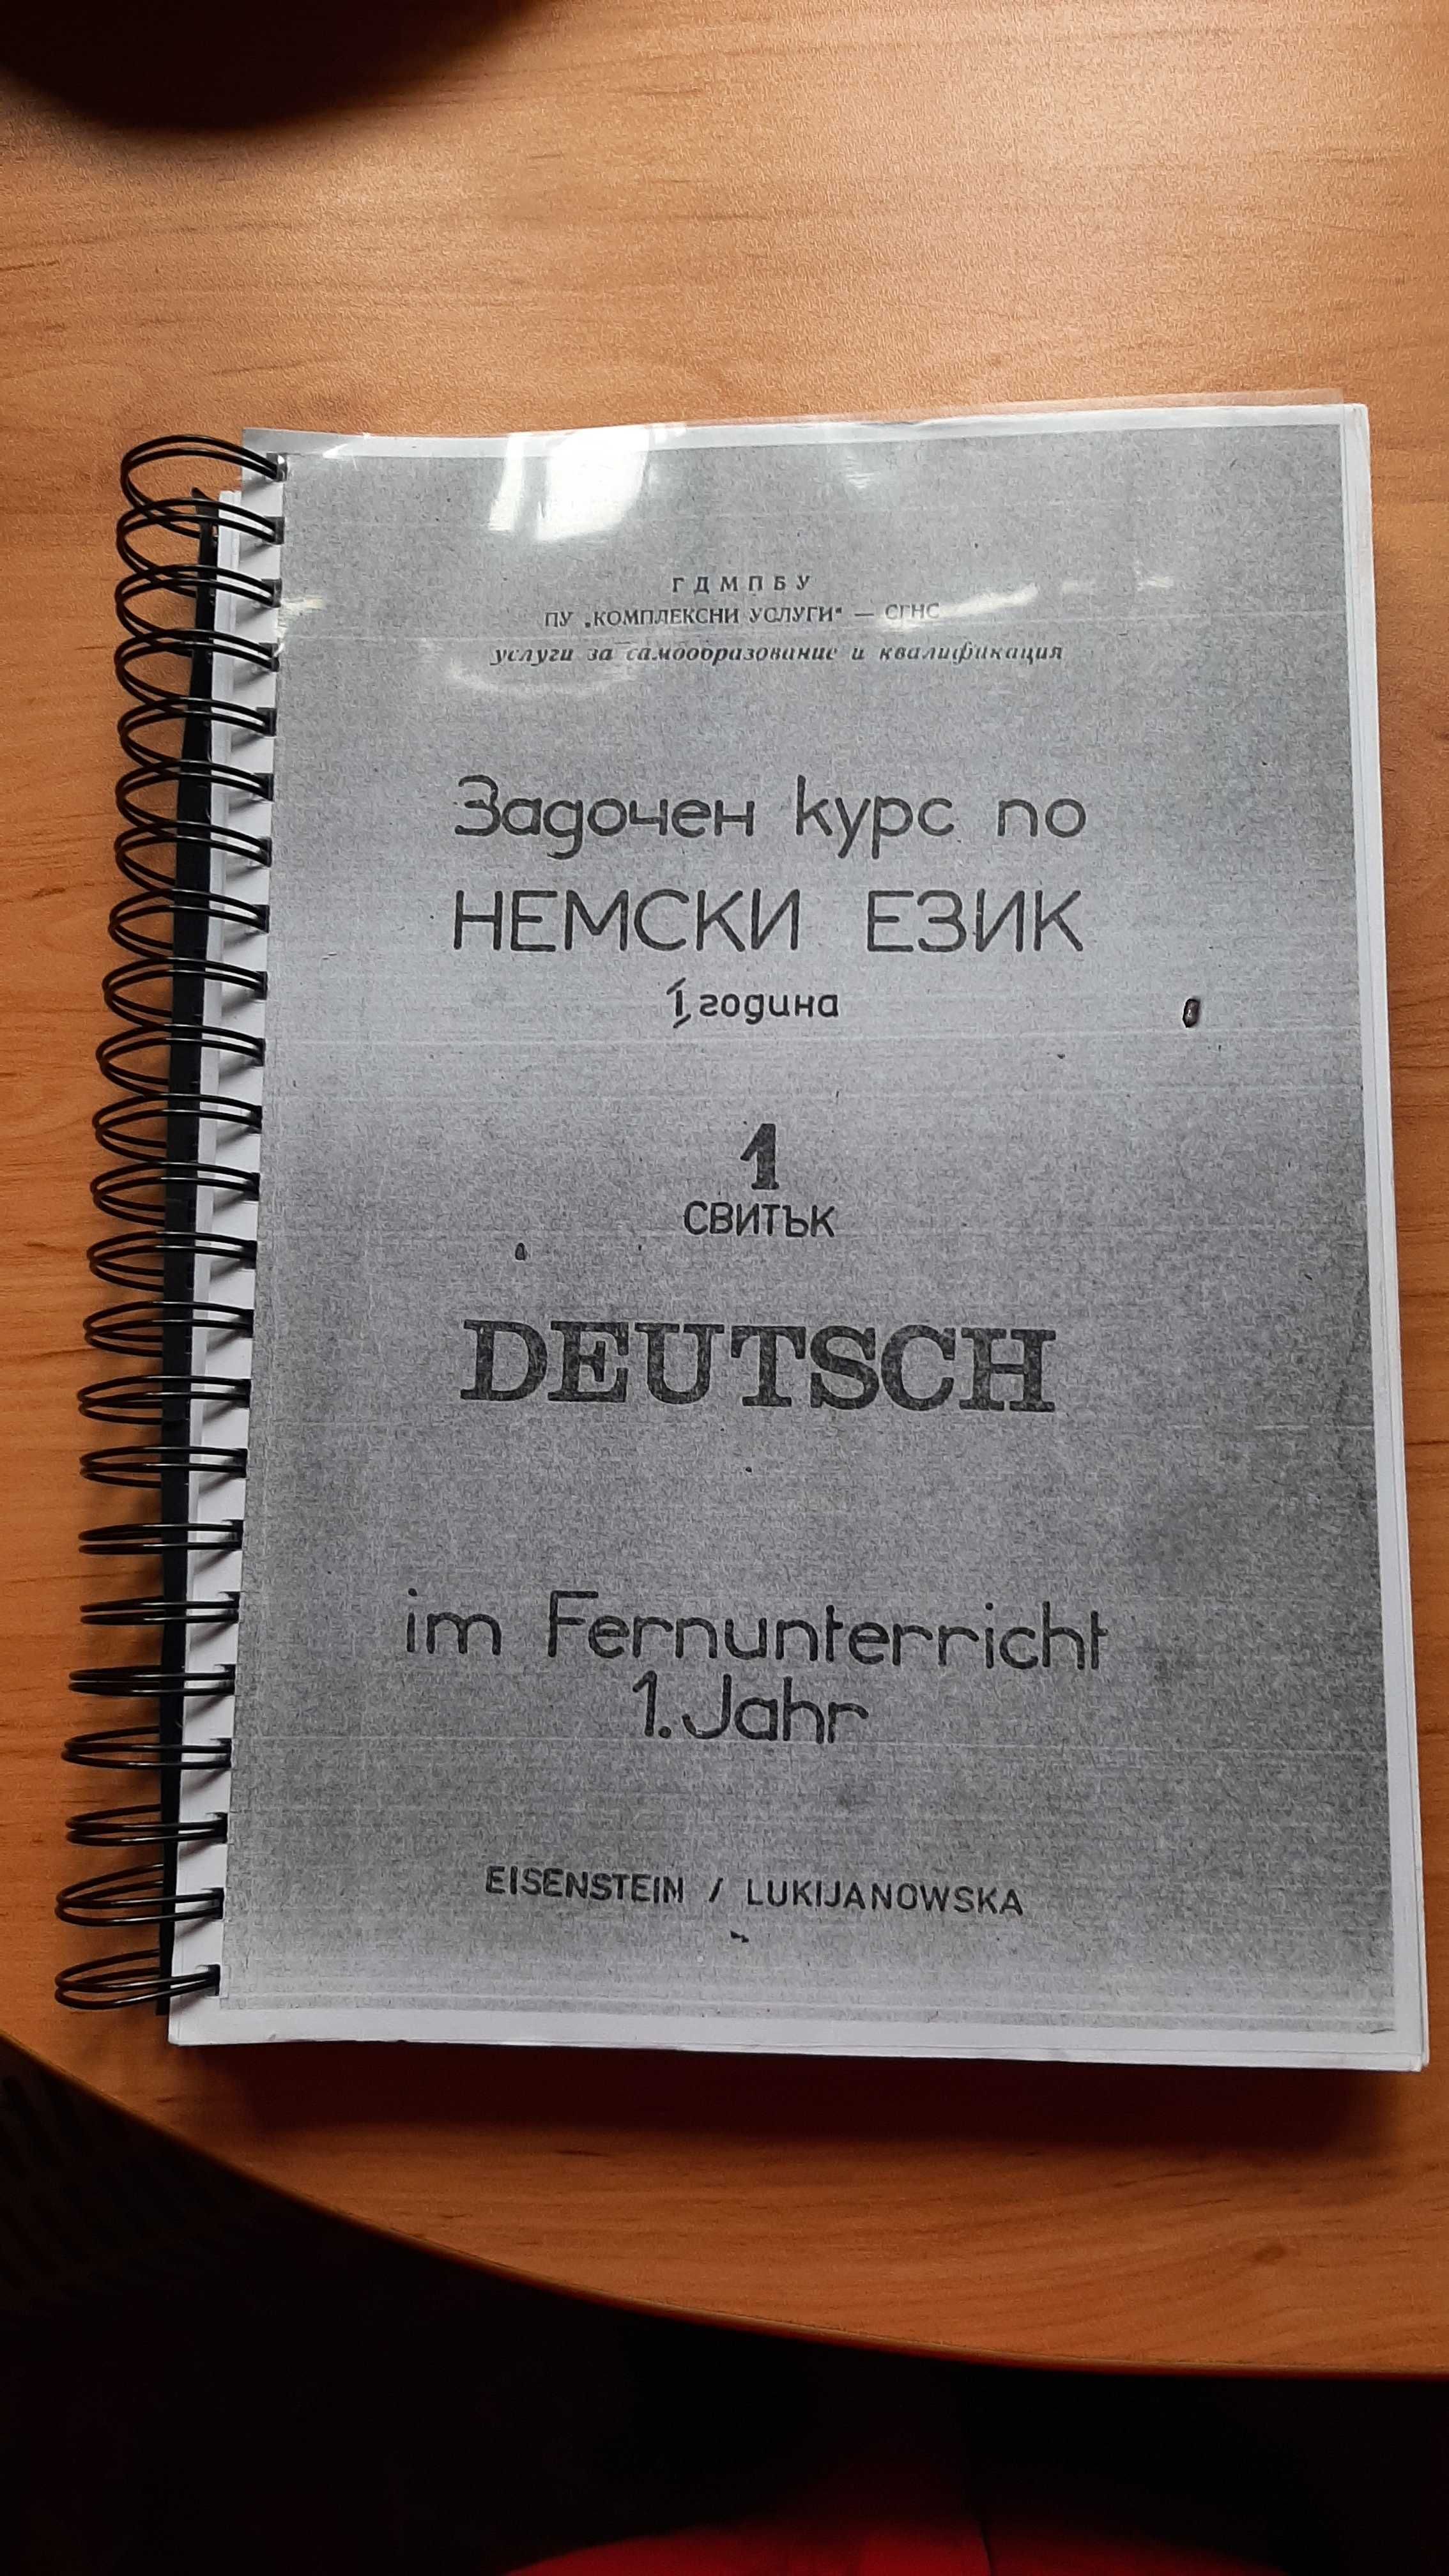 Учебници/екскурзоводство на руски и немски език